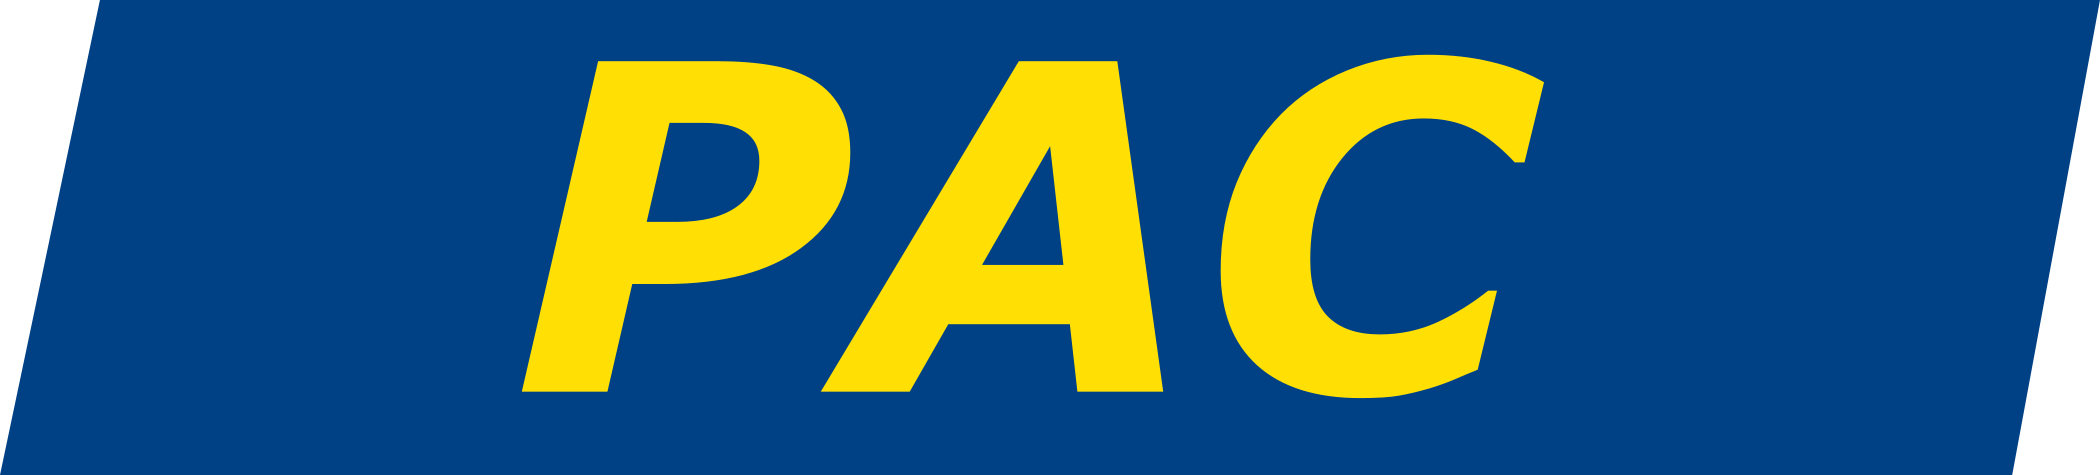 pac correios logo 3 - PAC Correios Logo